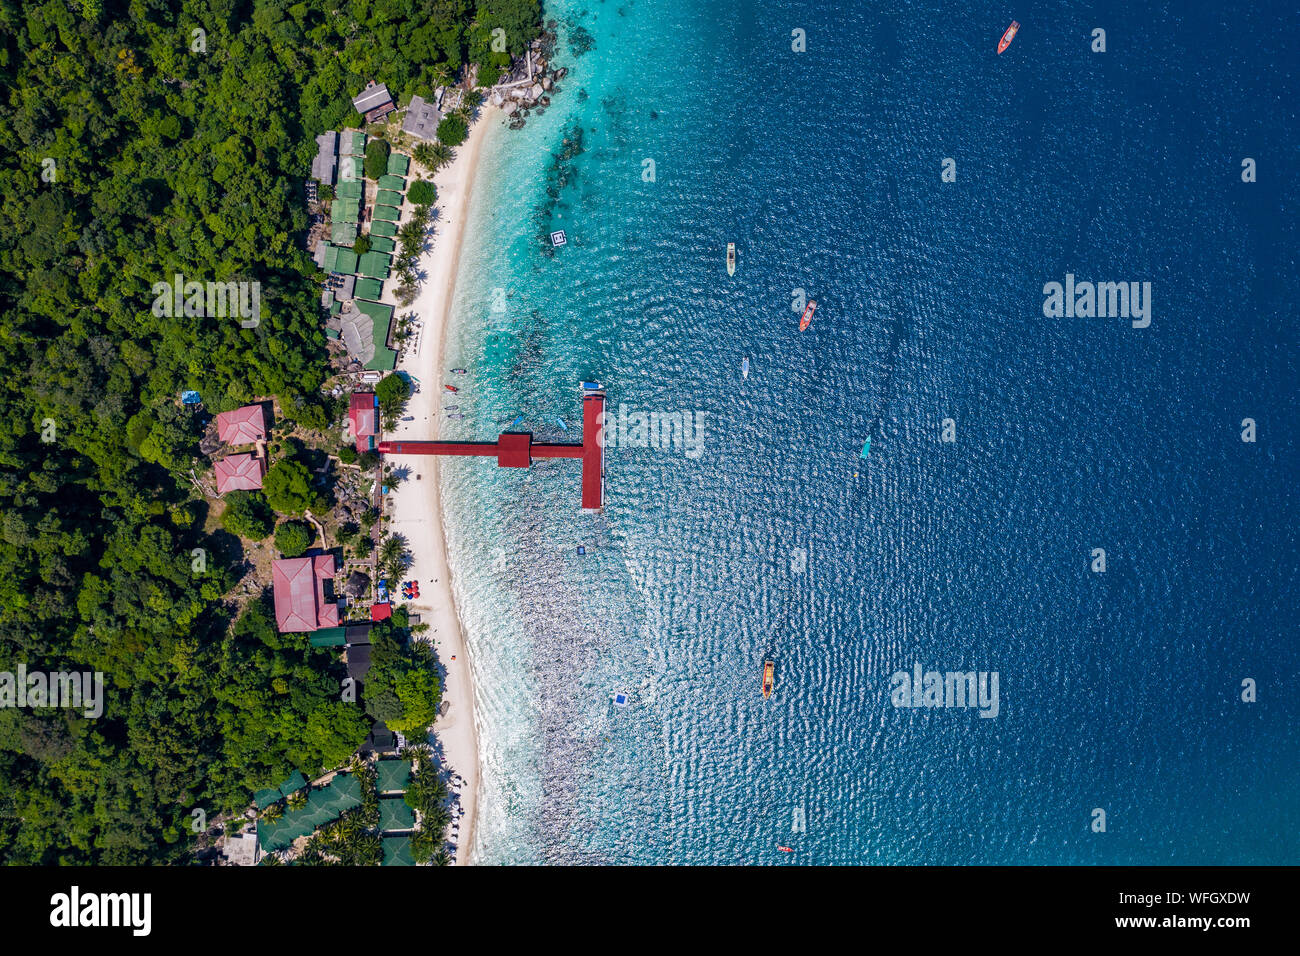 Overhead view of a Jetty, Pulau Perhentian Besar island, Tenrengganu, Malaysia Stock Photo